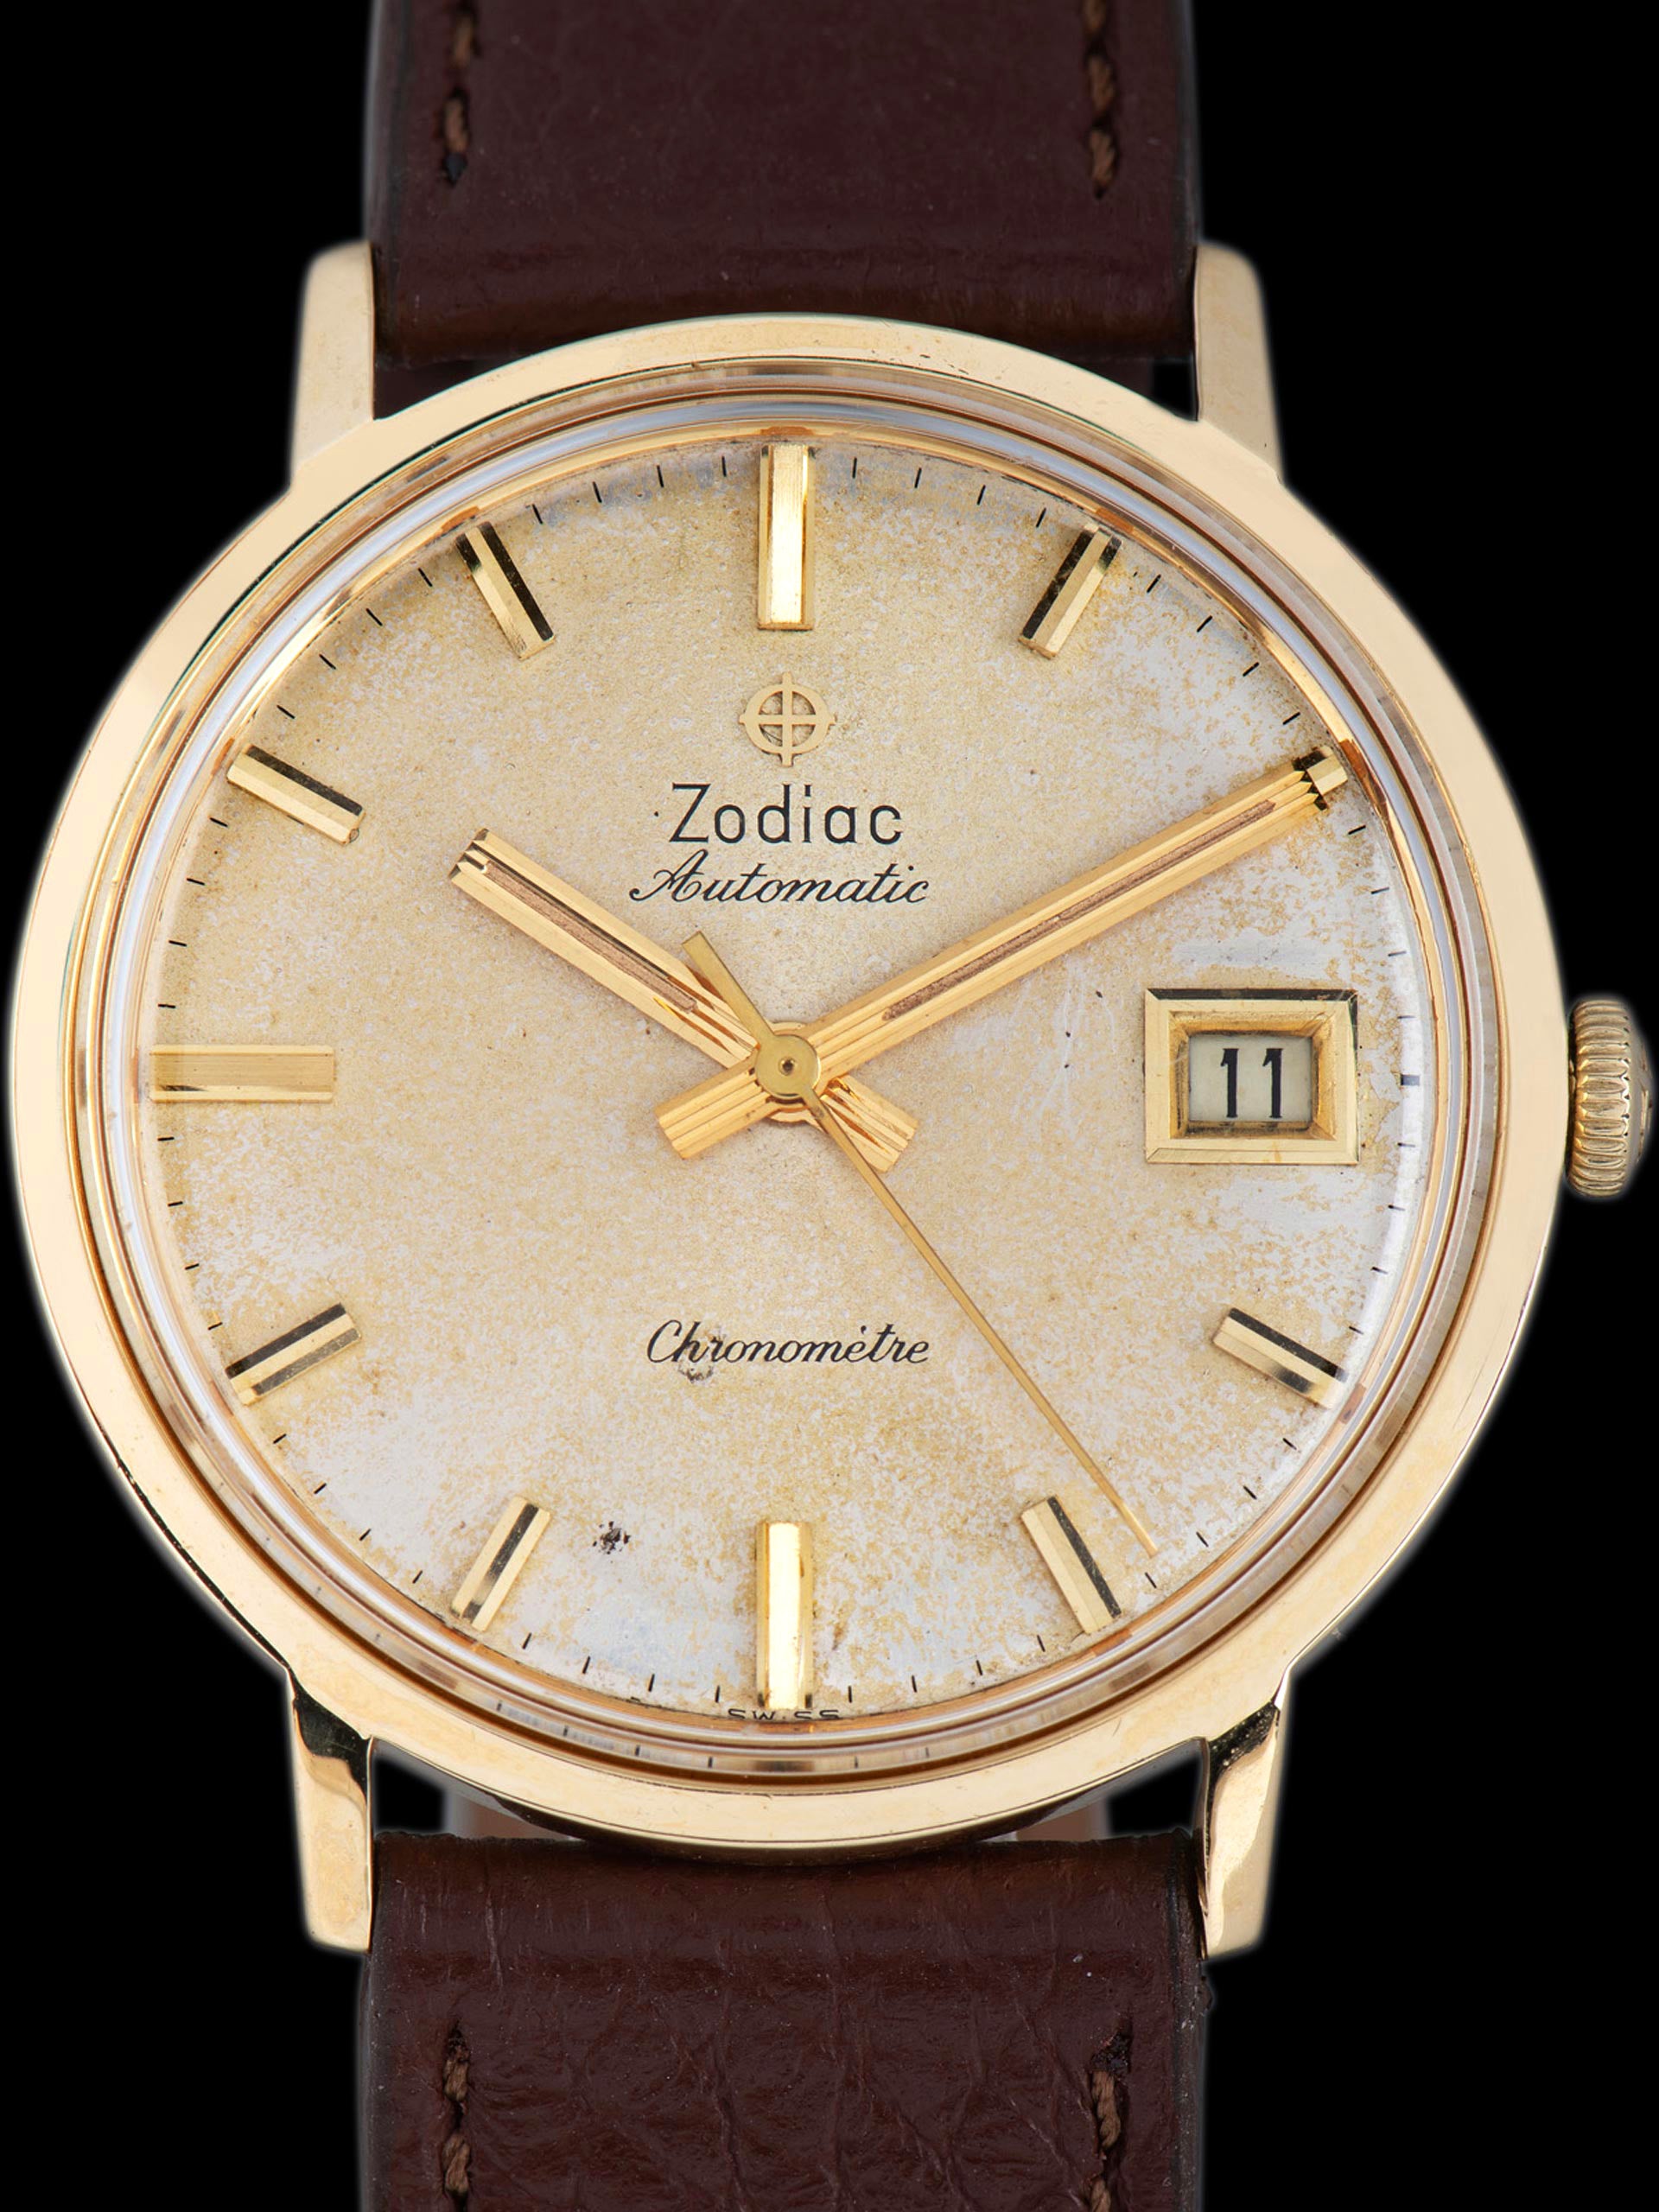 1950s Zodiac Automatic Chronometre (Ref. 725-322) 18K YG